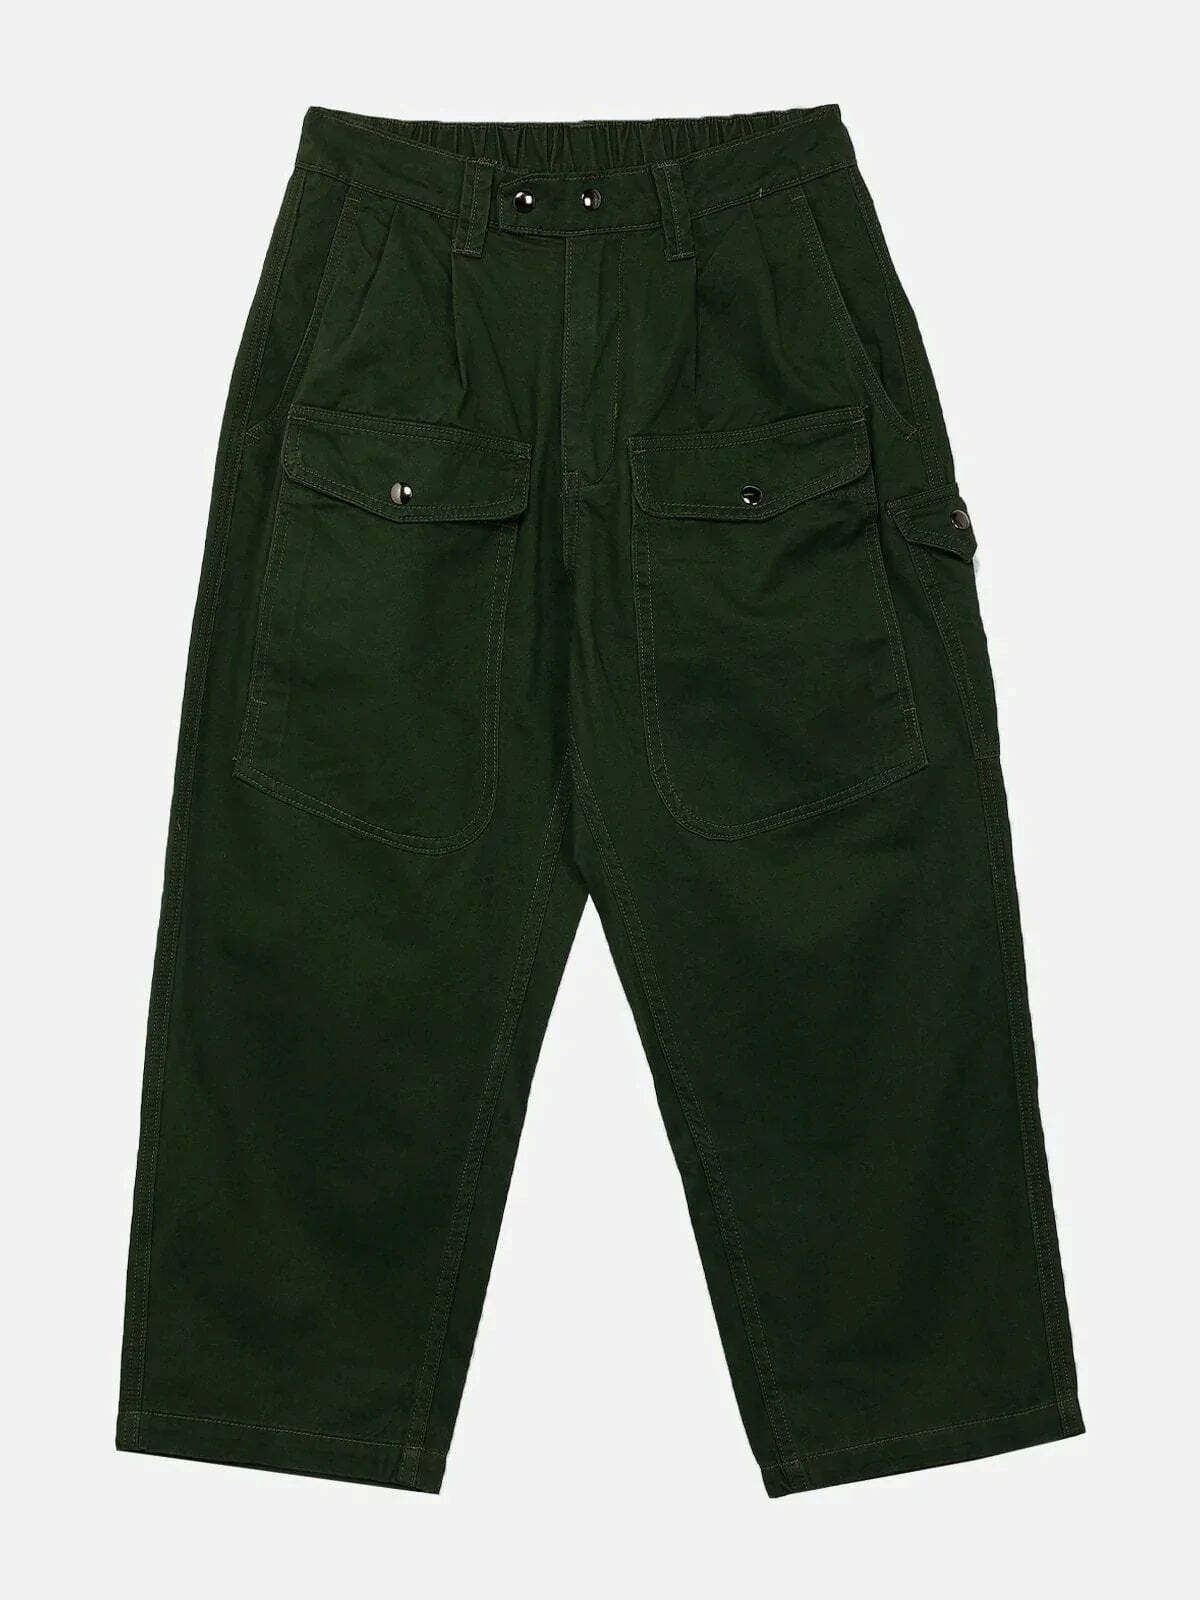 solid button pants sleek & urban streetwear 6746